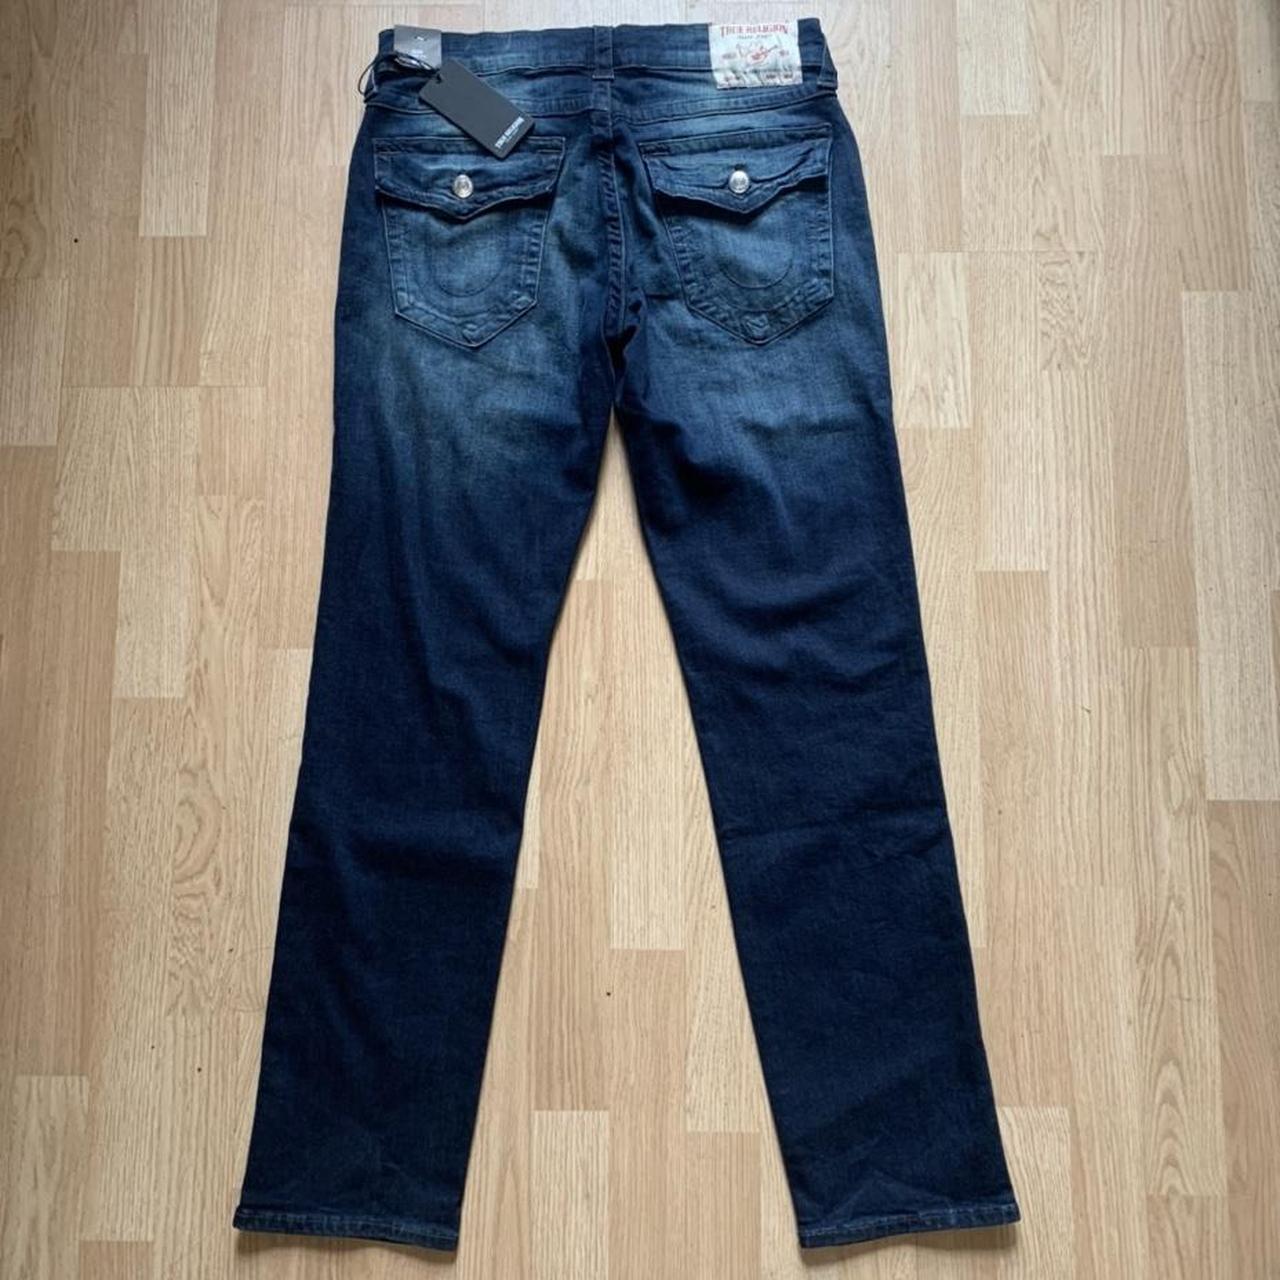 True Religion dark wash Geno jeans Relaxed fit... - Depop